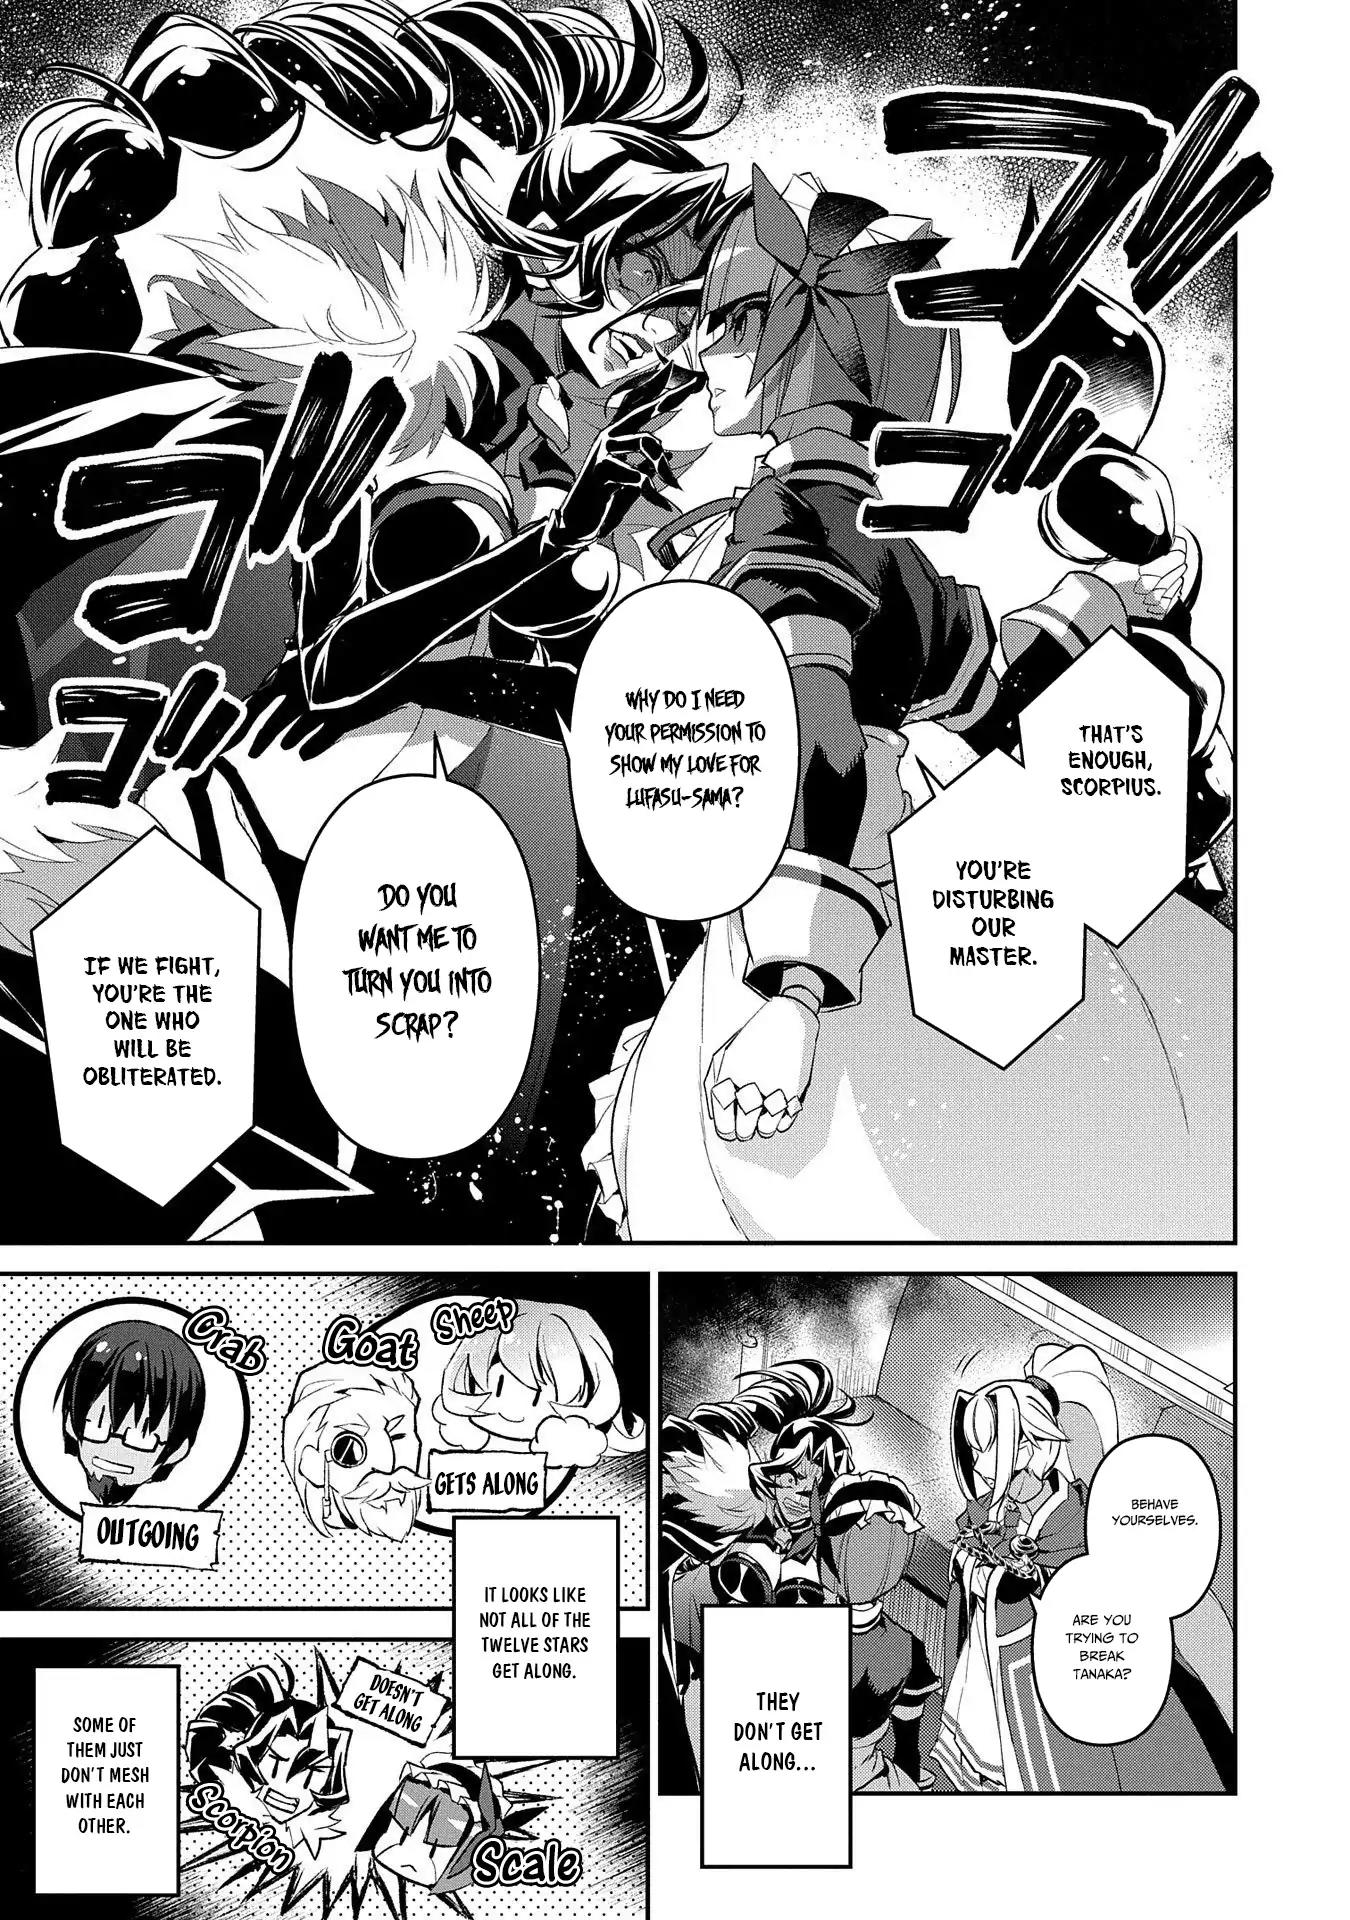 Yasei no Last Boss ga Arawareta! Vol.1 Chapter 27: